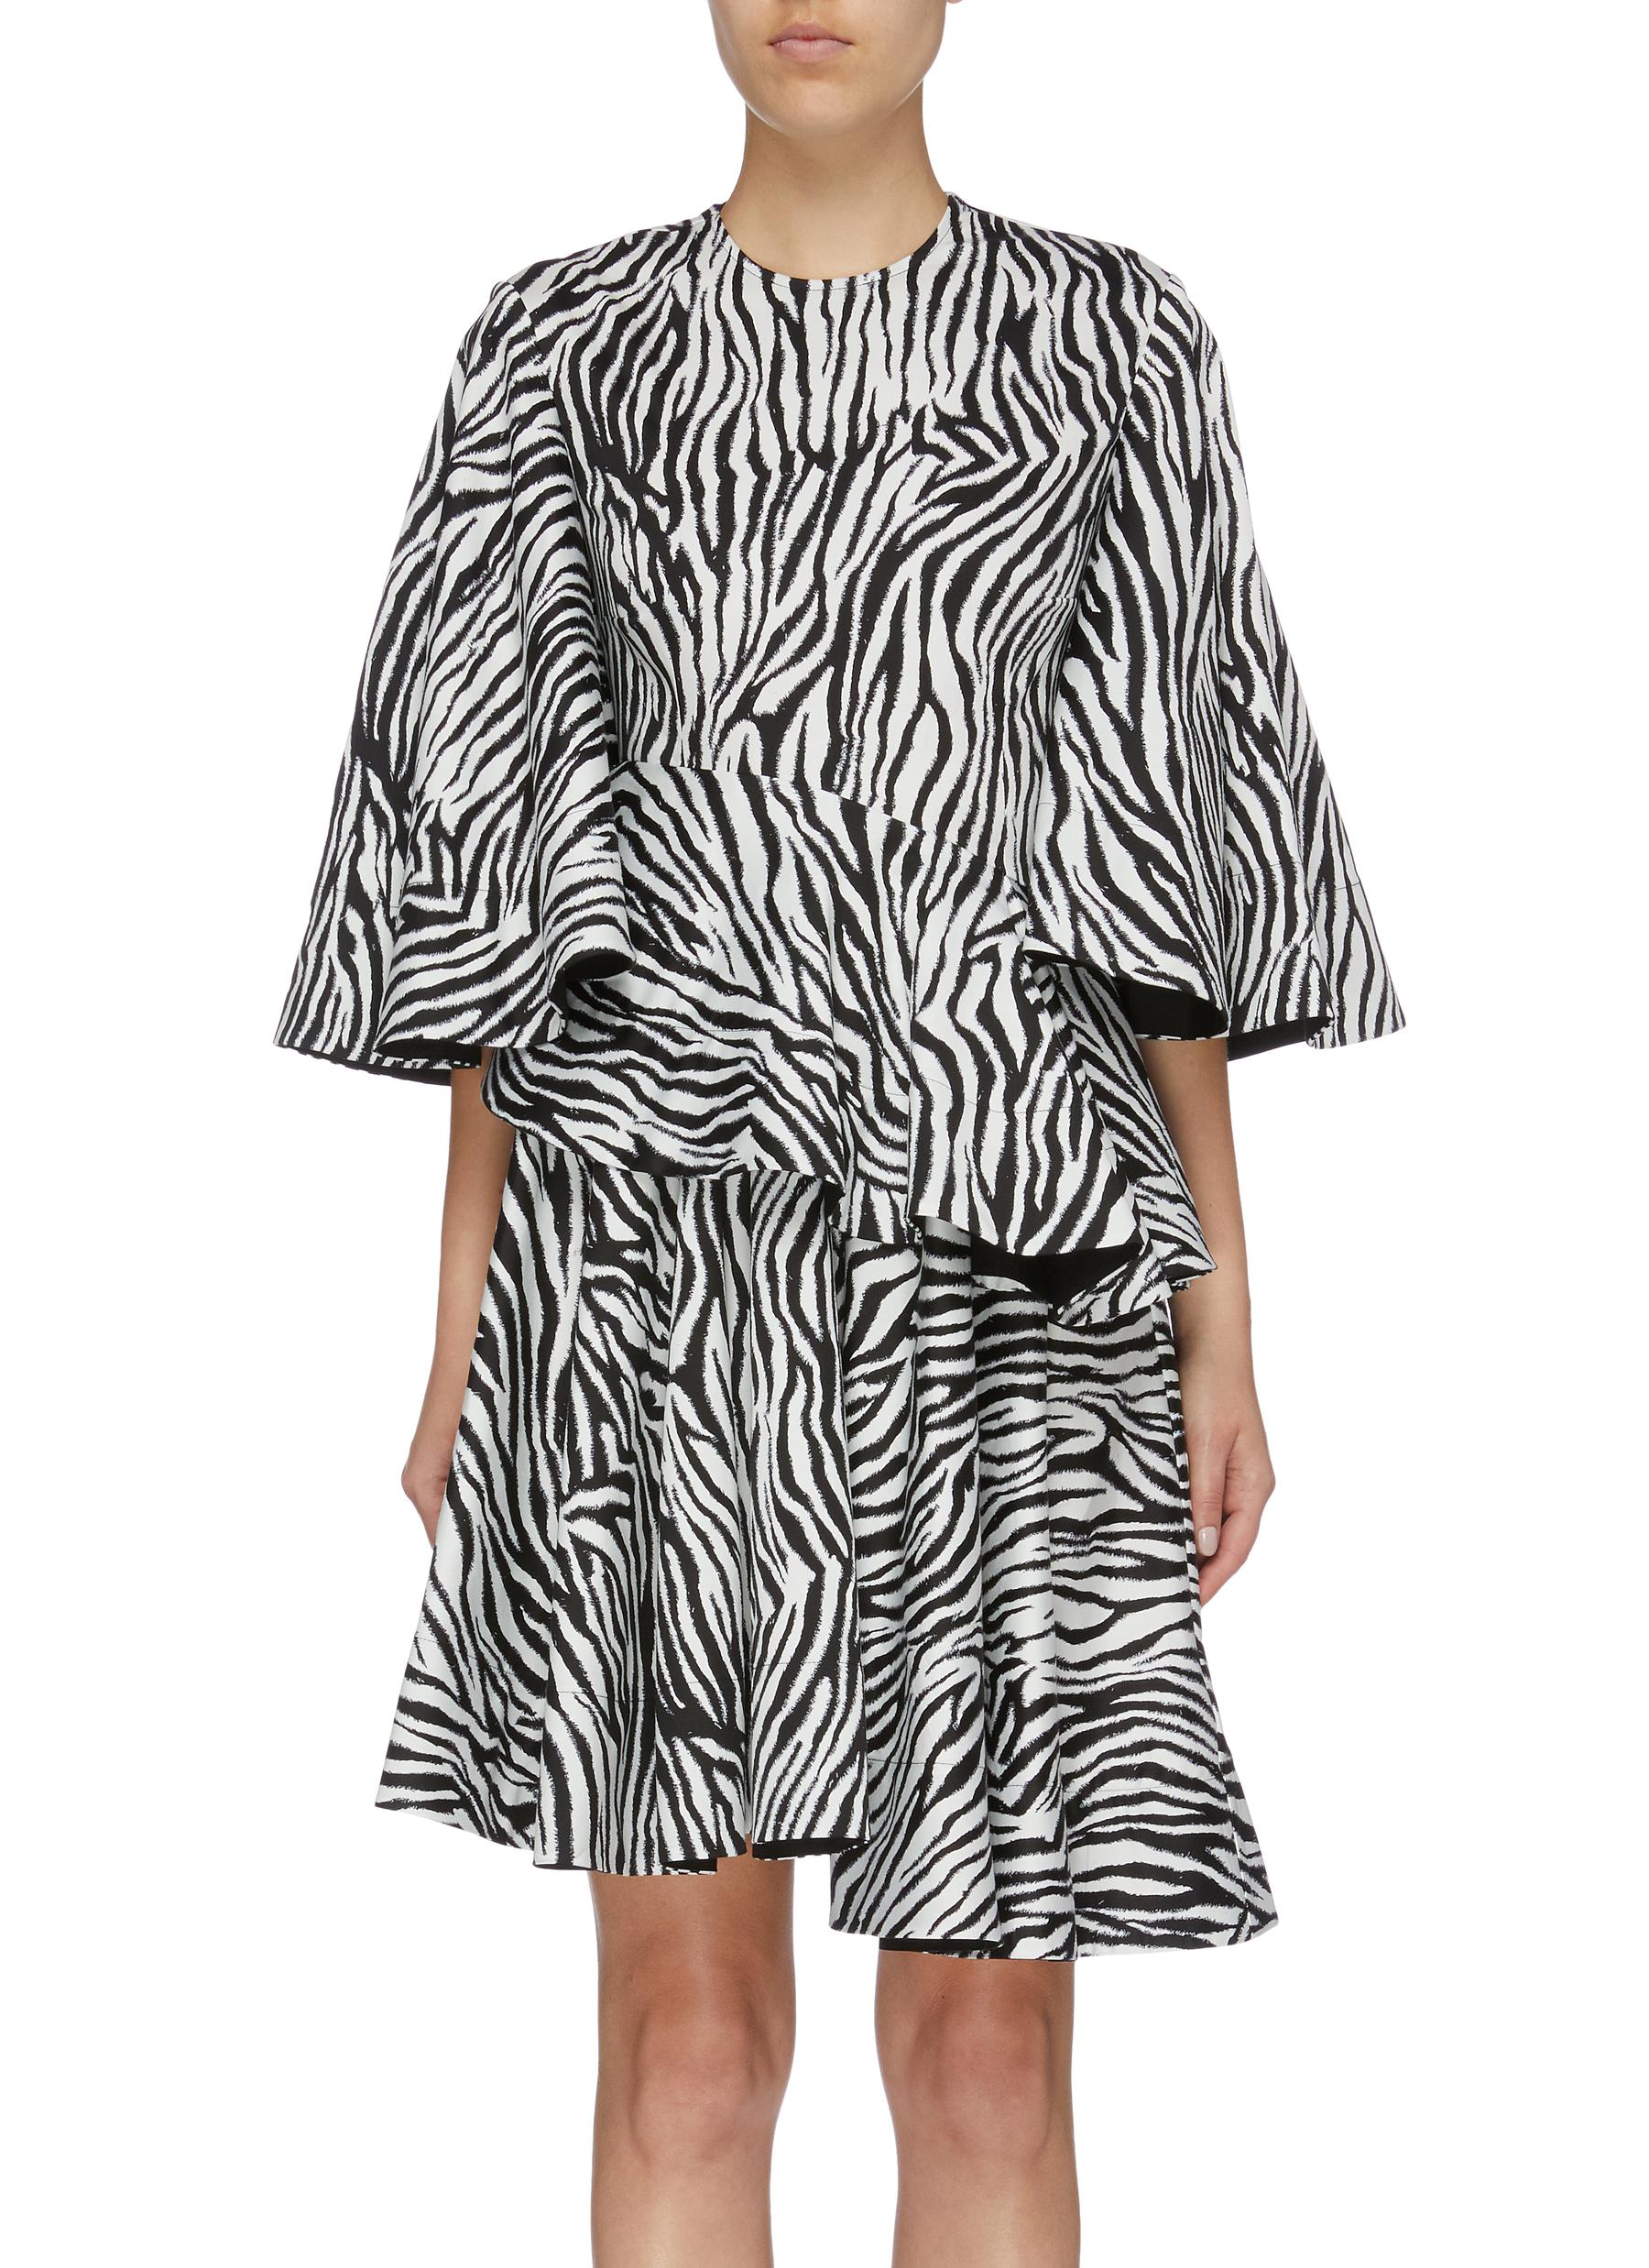 Amaris flared sleeve zebra stripe peplum dress by Solace London